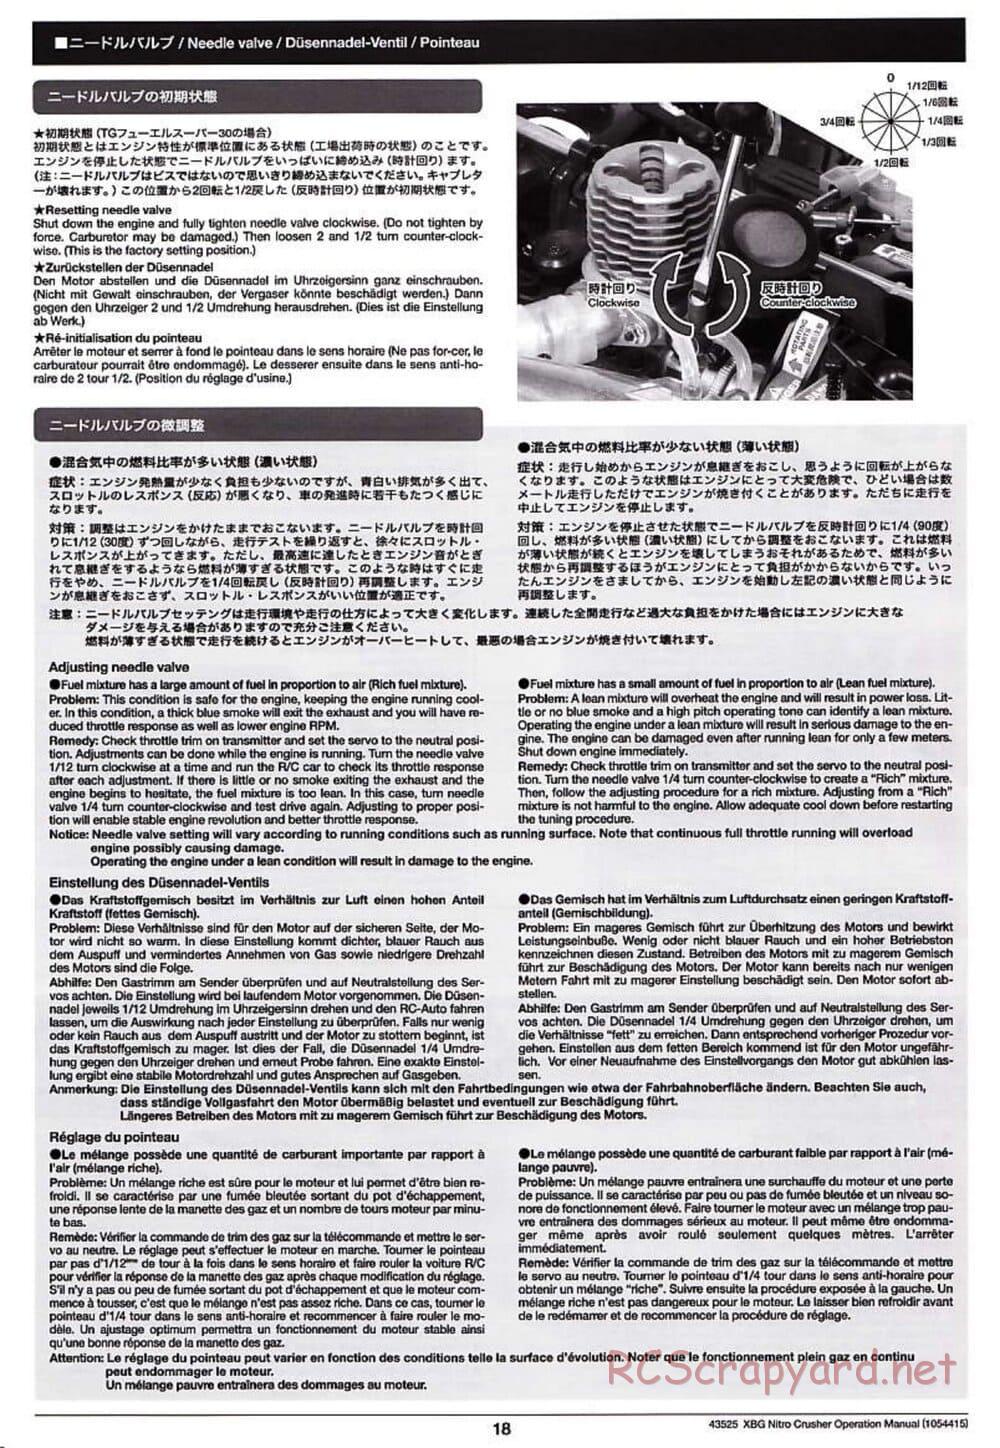 Tamiya - Nitro Crusher - NDF-01T - Operating Manual - Page 18